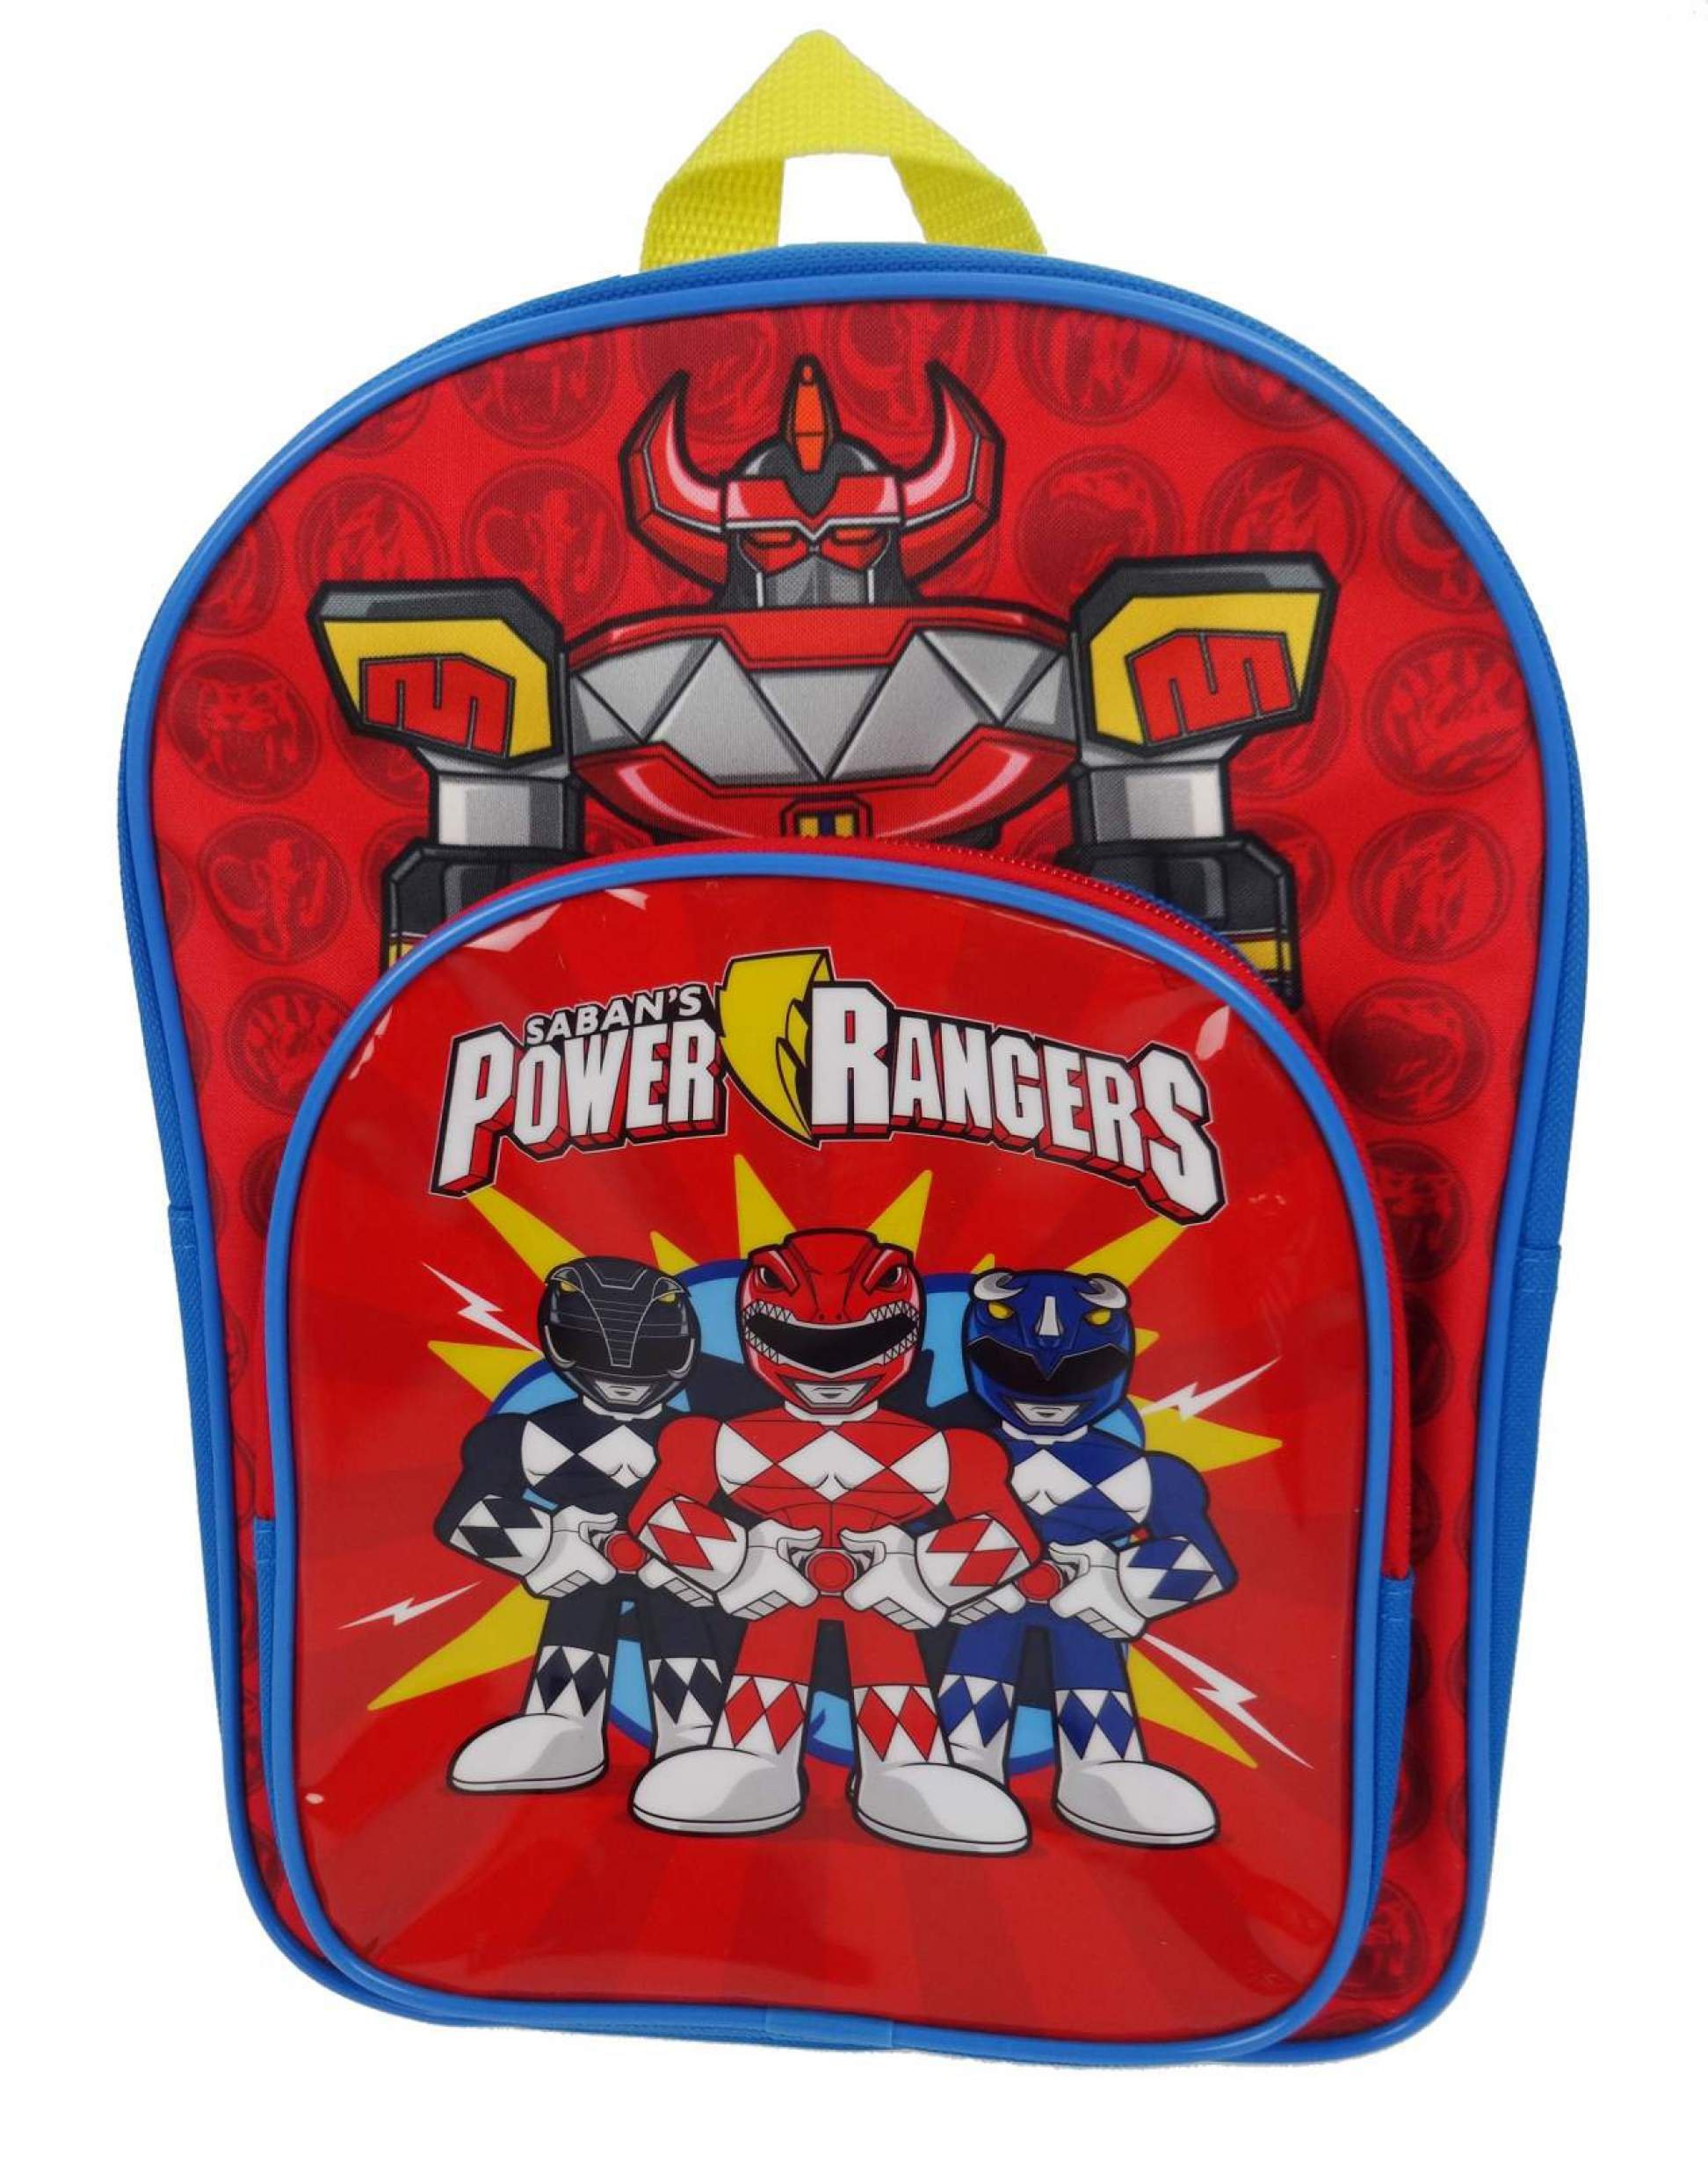 Power Rangers Saban'S ' Arch Pocket' School Bag Rucksack Backpack